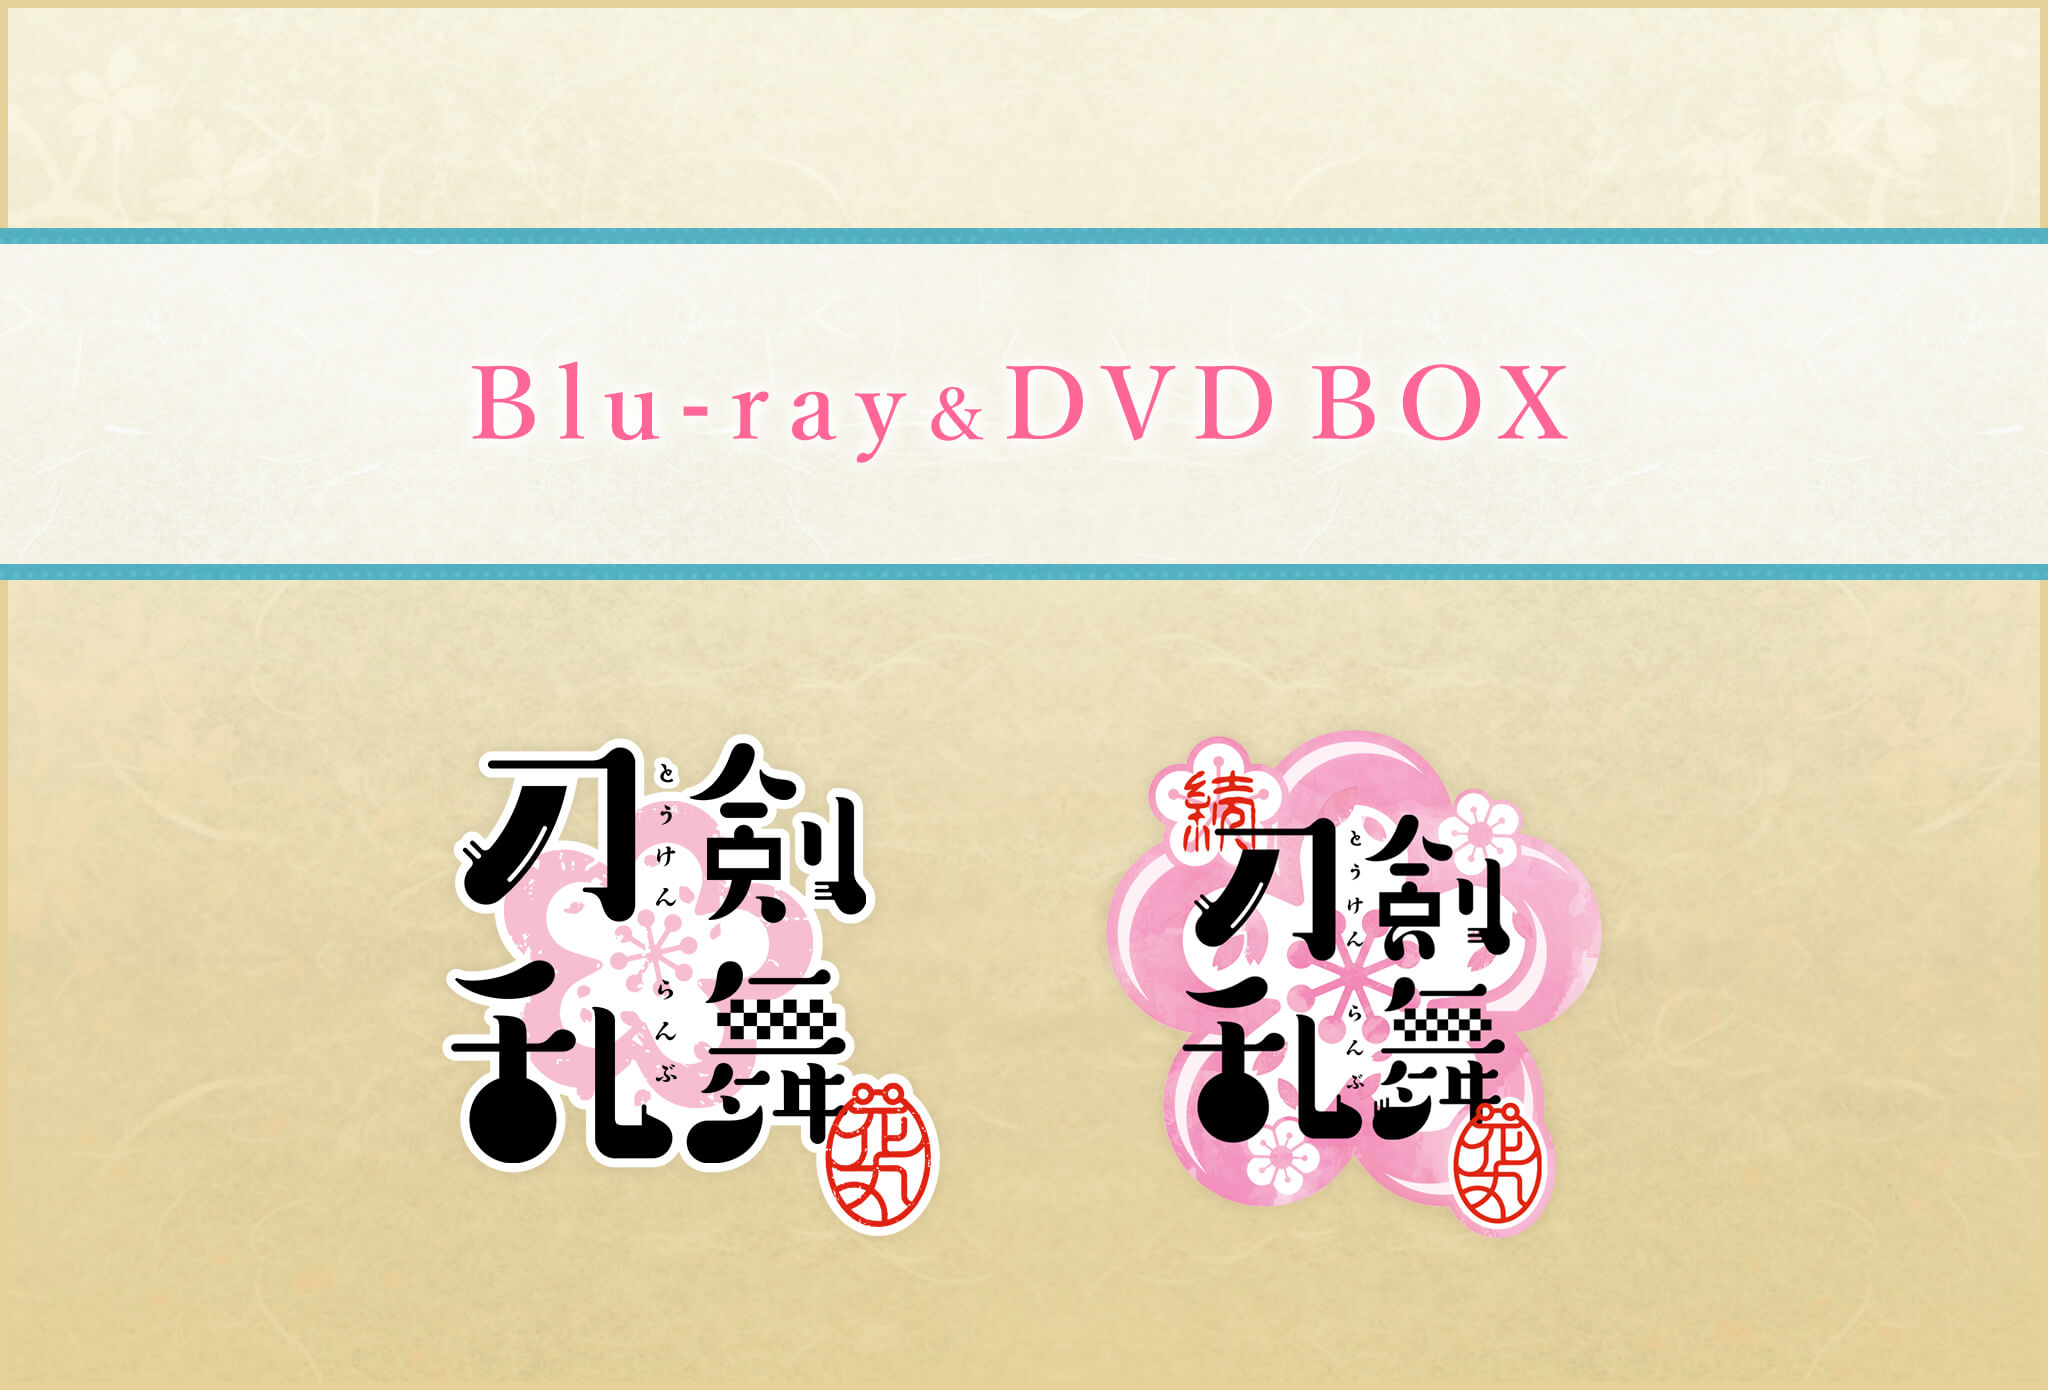 TVアニメ第1期「刀剣乱舞-花丸-」と第2期の続「刀剣乱舞-花丸-」がそれぞれBlu-ray&DVDBOXとなって発売決定！！